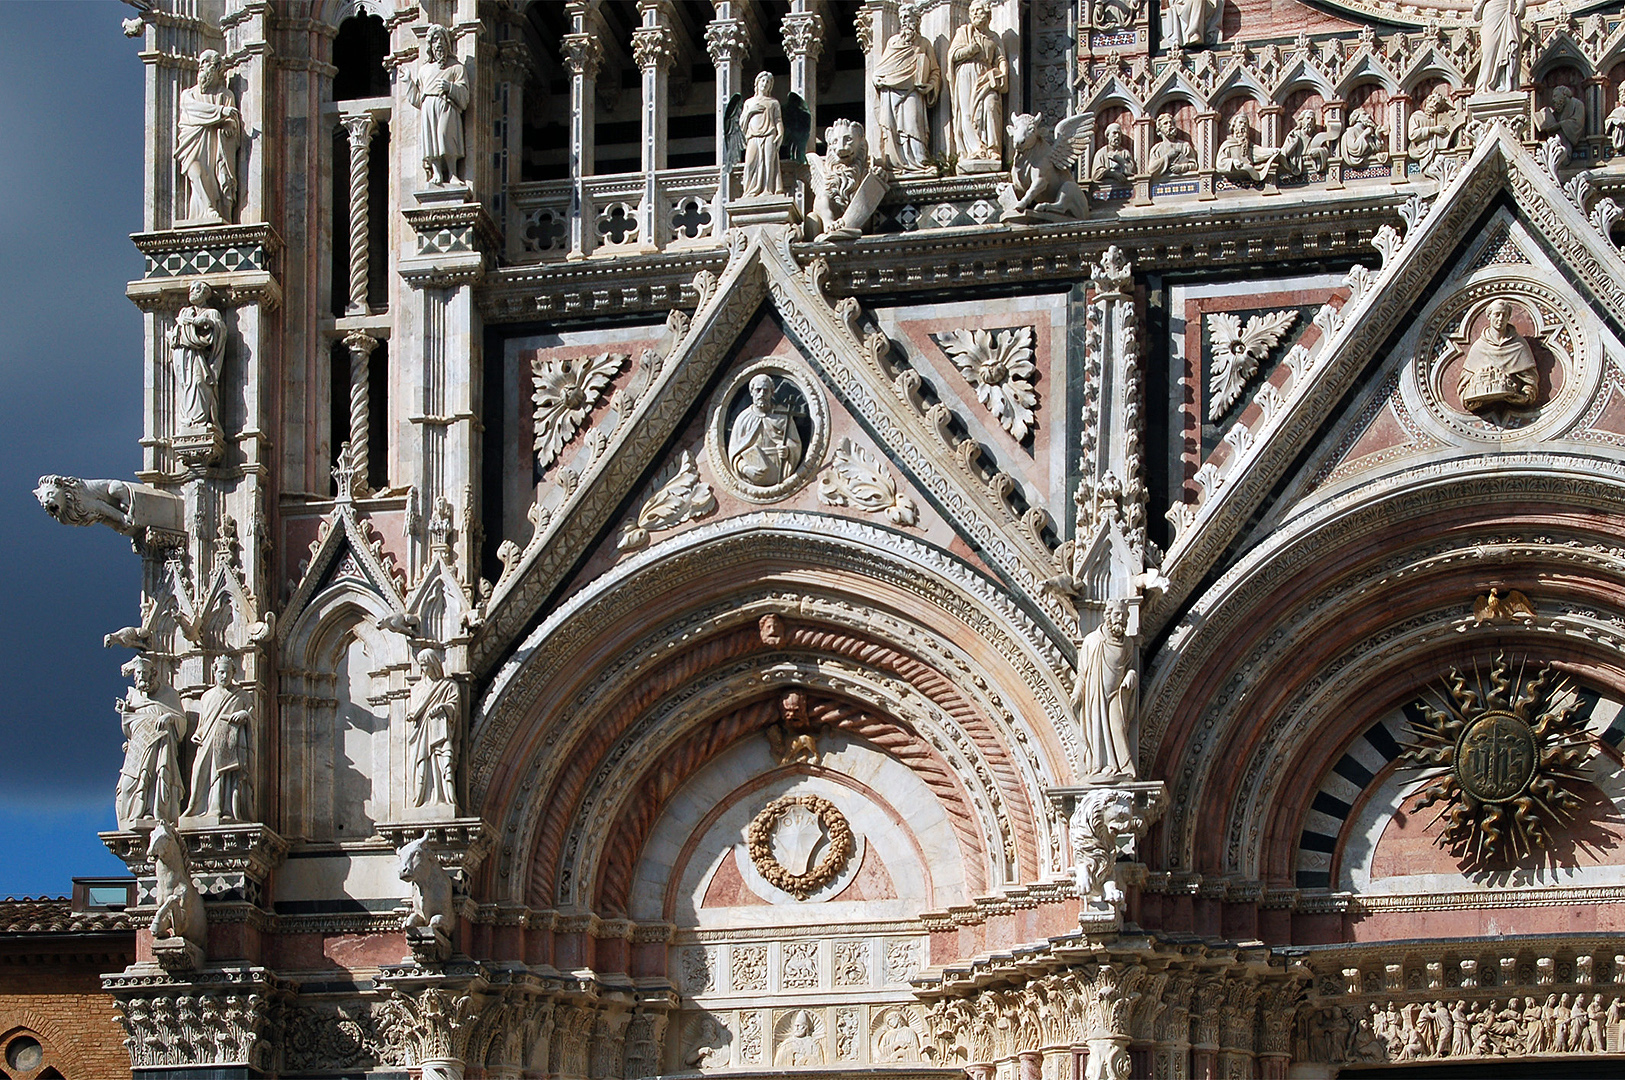 Hevel van de Dom van Siena, Toscane, Italië, Siena Cathedral, Tuscany, Italy